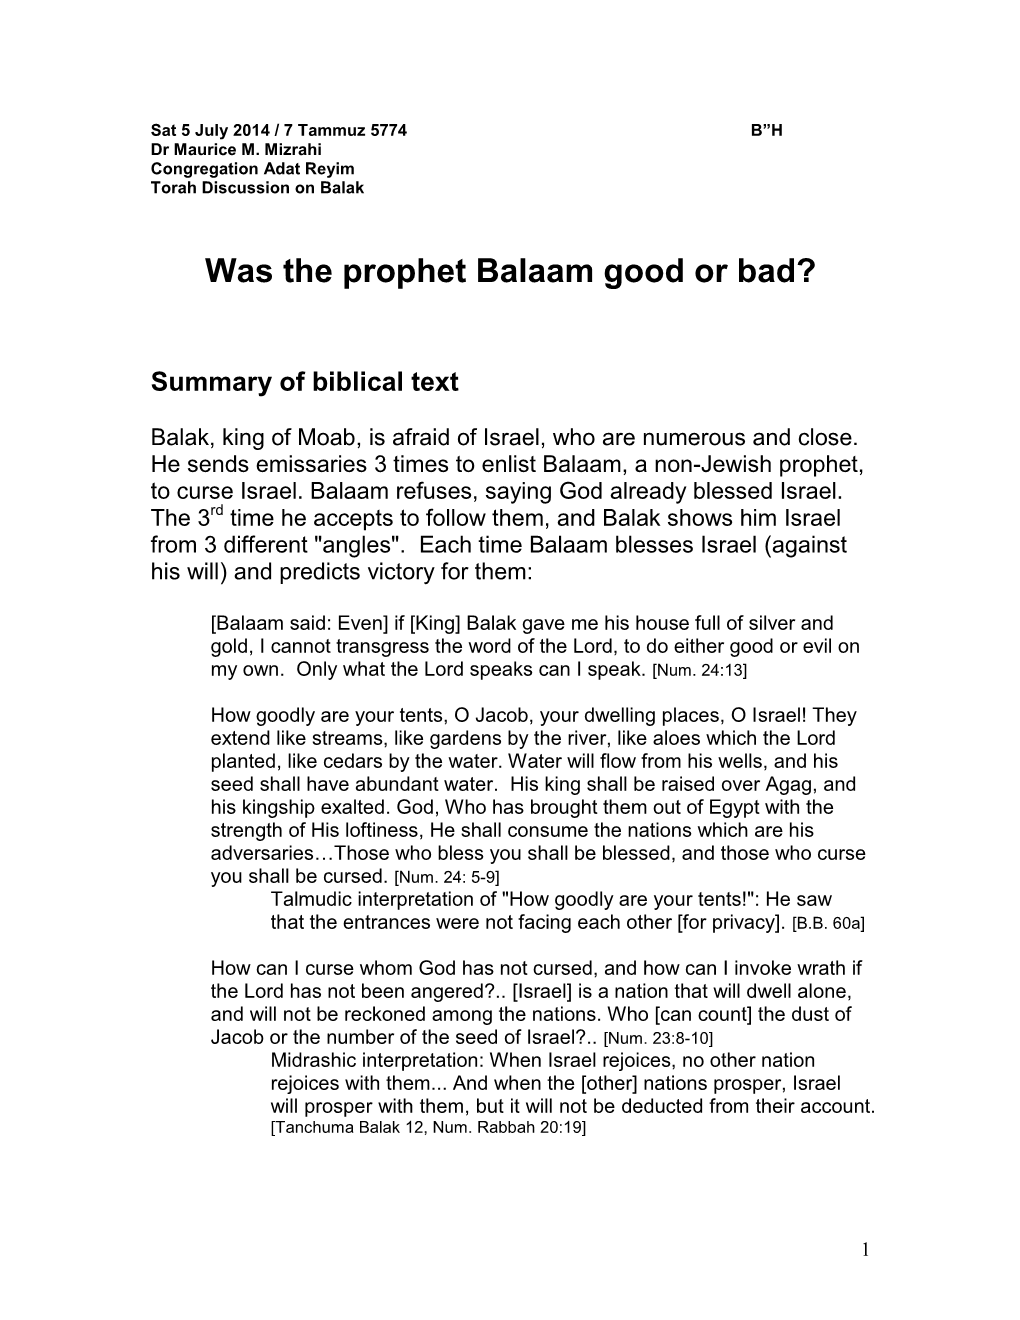 Was the Prophet Balaam Good Or Bad?